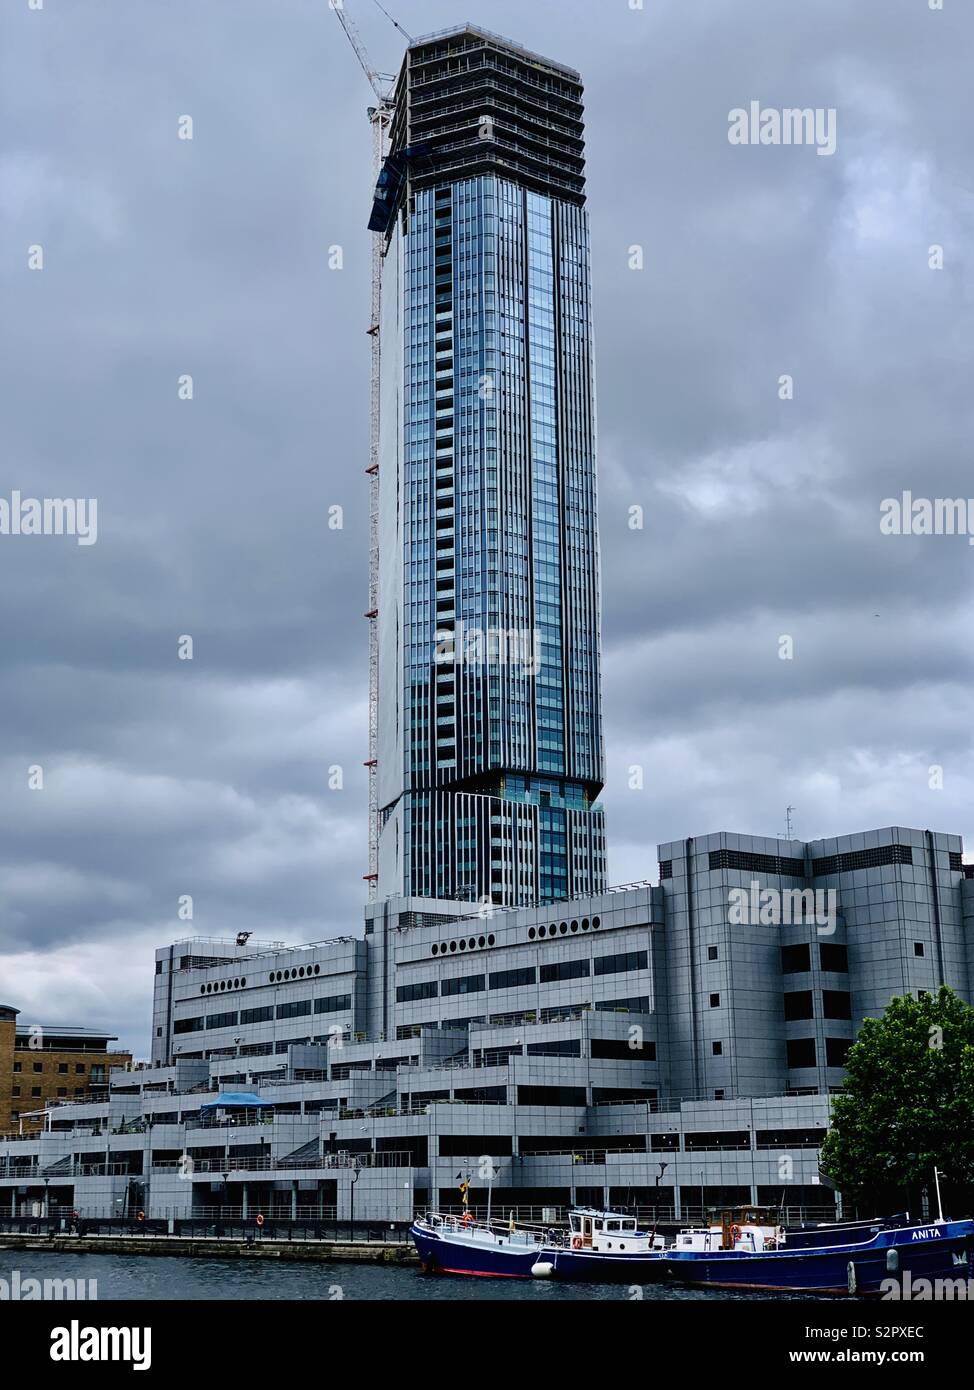 London, UK - 15th June 2019: Towering skyscraper in Canary Wharf. Stock Photo